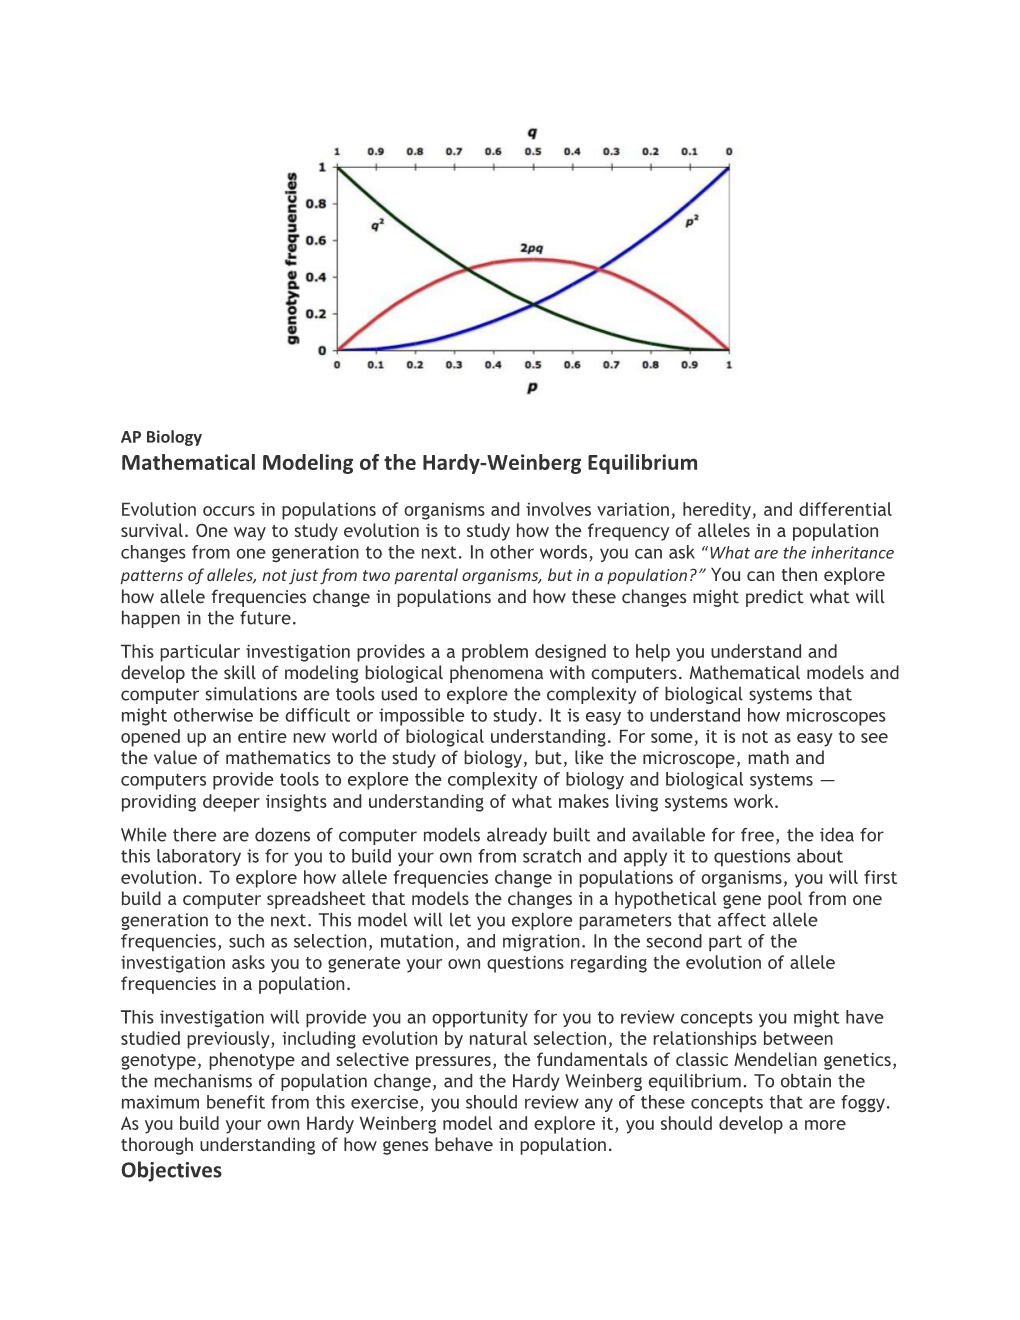 Mathematical Modeling of the Hardy-Weinberg Equilibrium